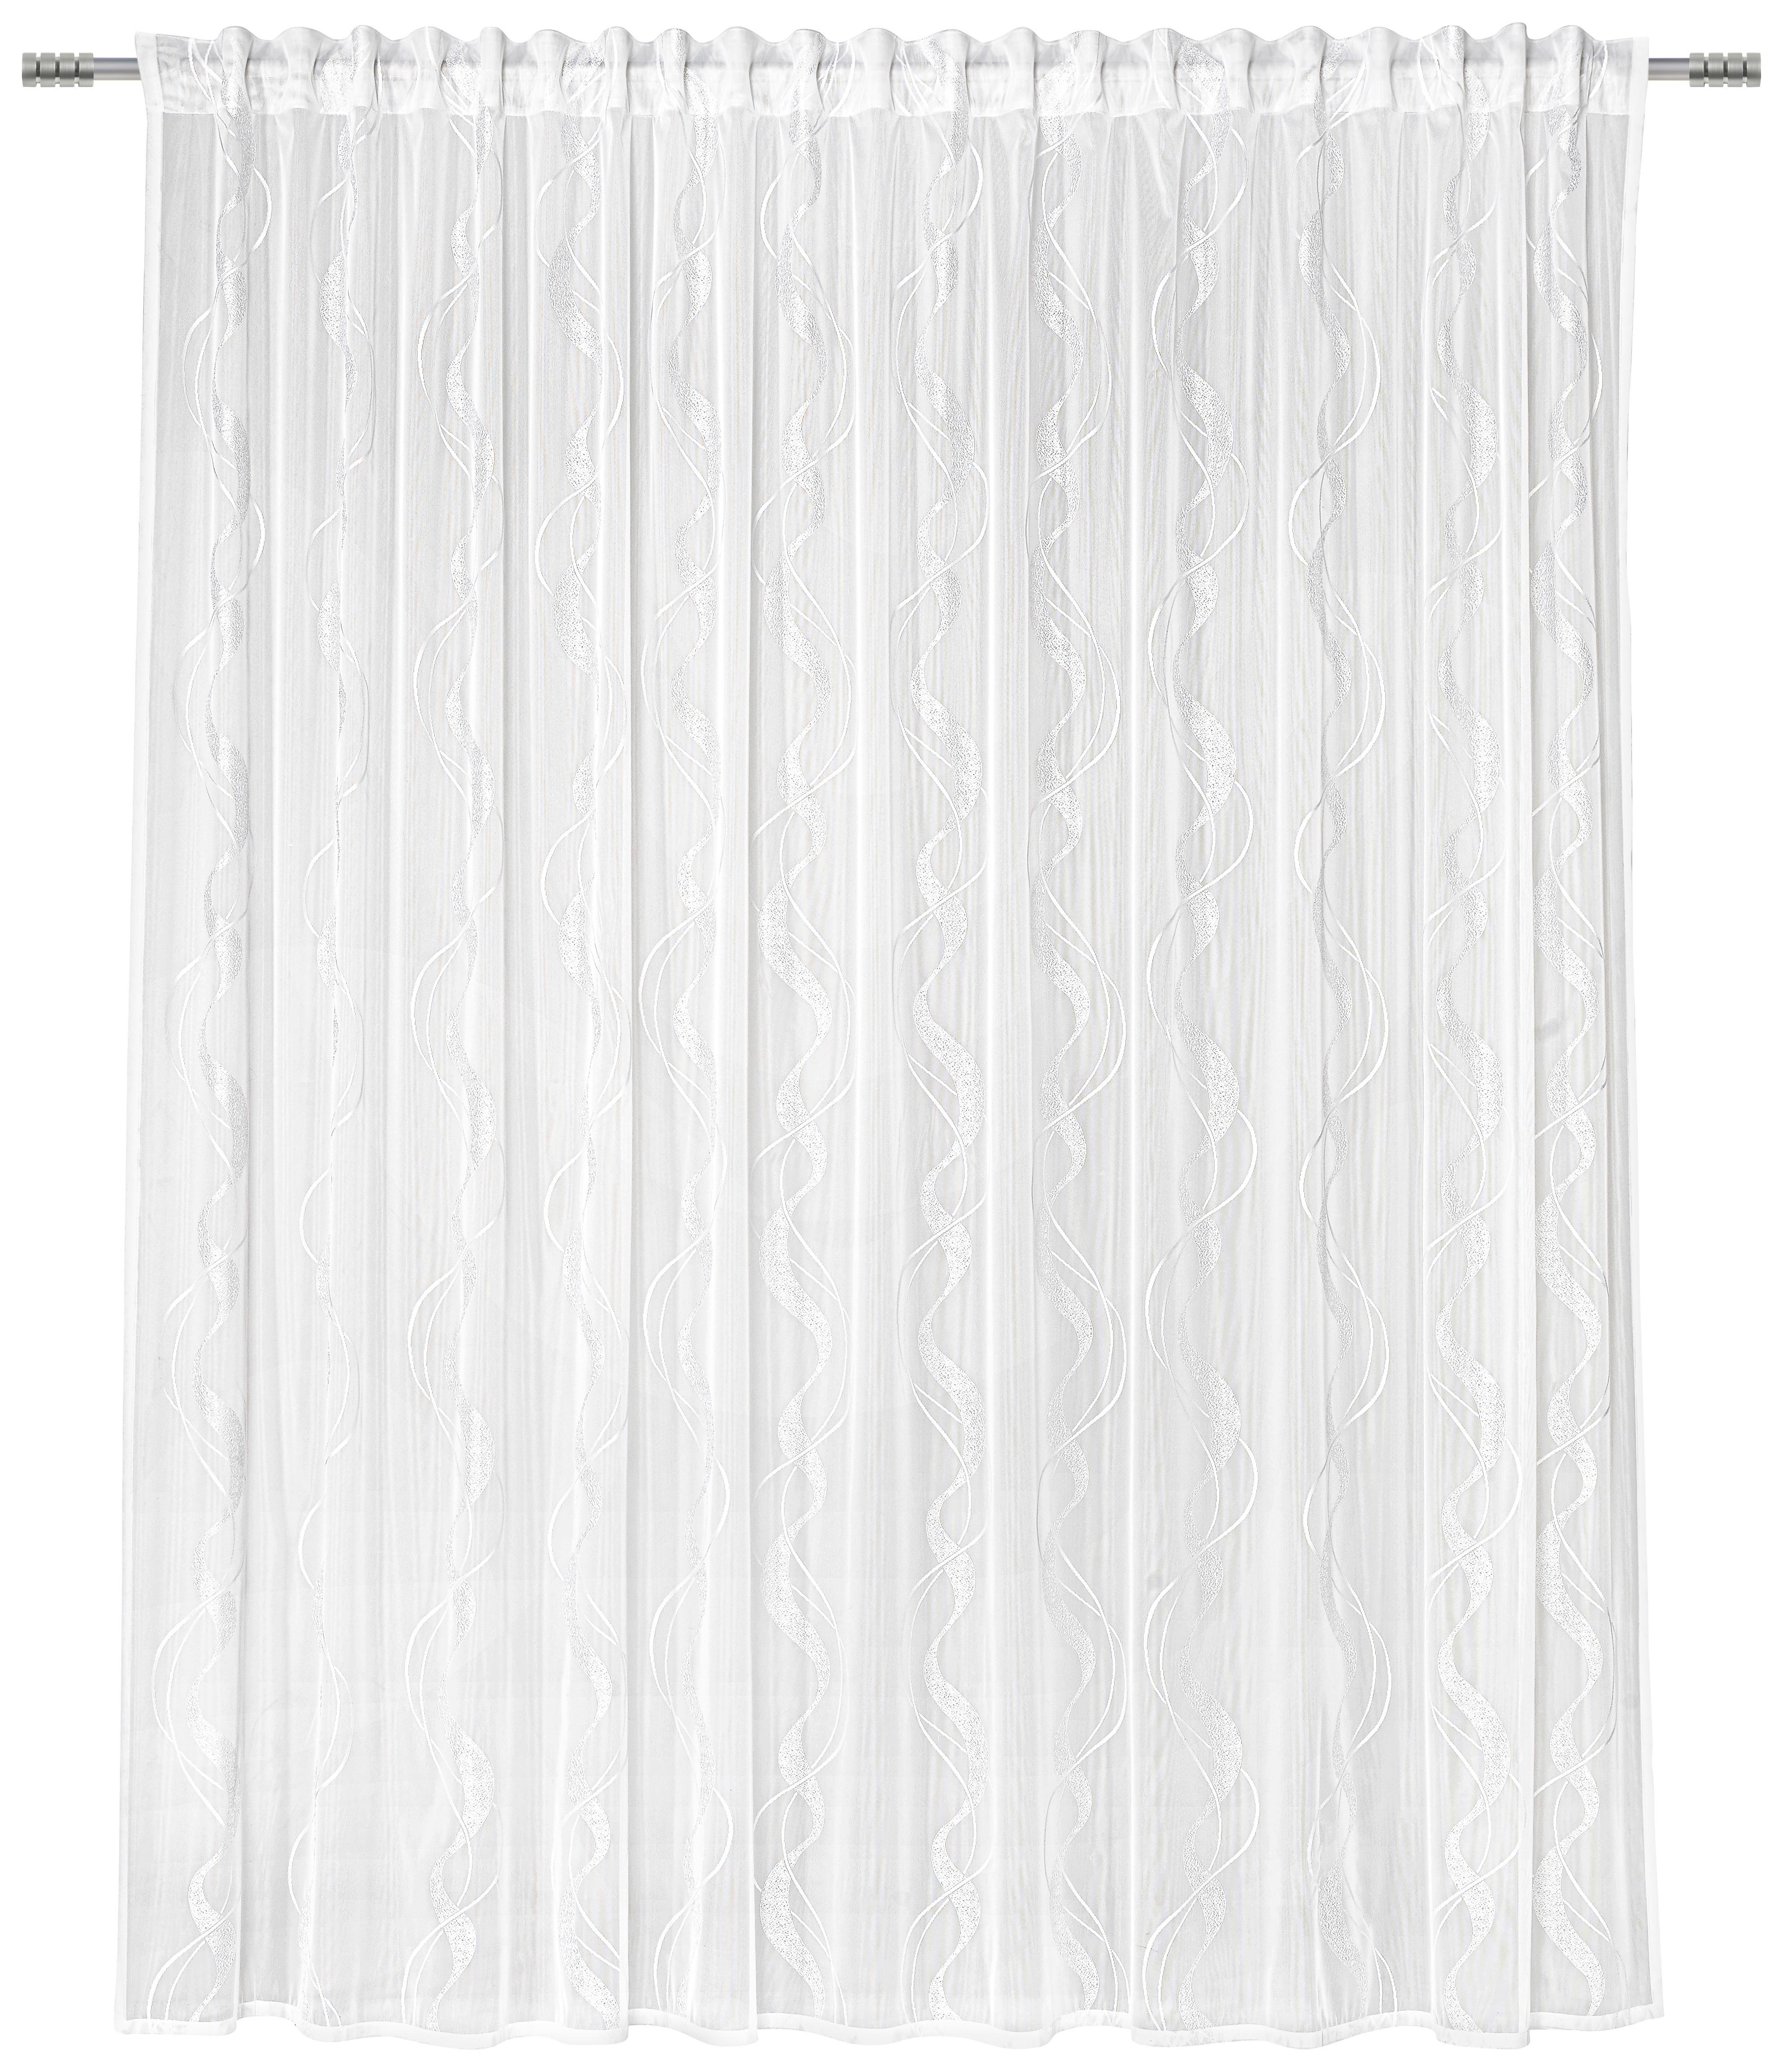 Fertigstore Wave Store 3 ca. 300x245cm - Weiß, Textil (300/245cm) - Modern Living